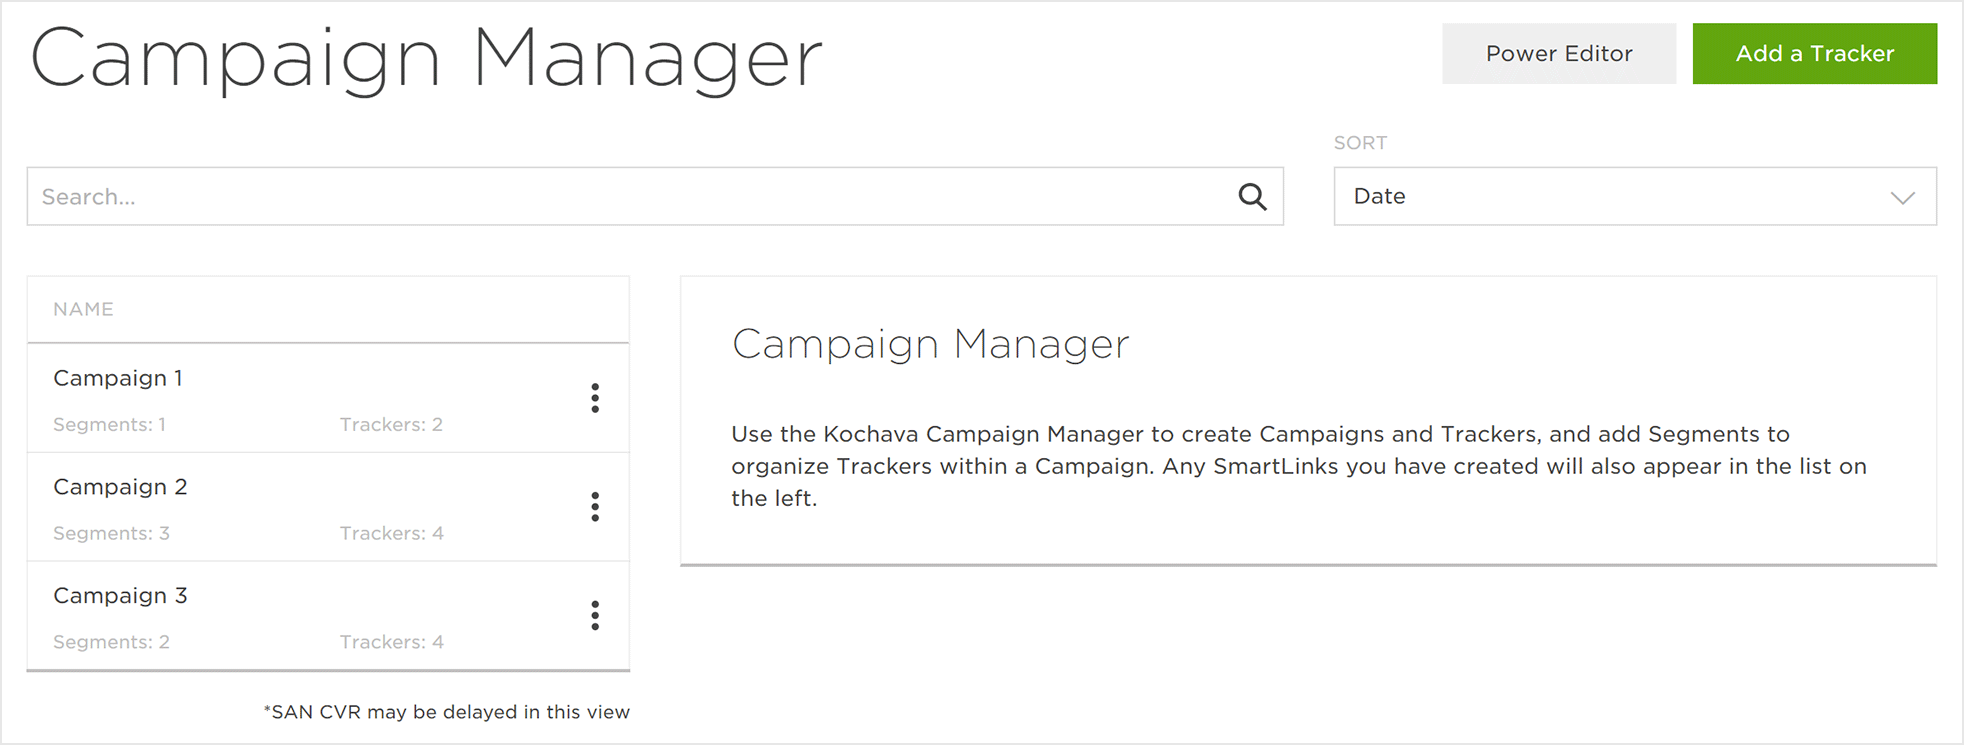 Campaign Management Overview